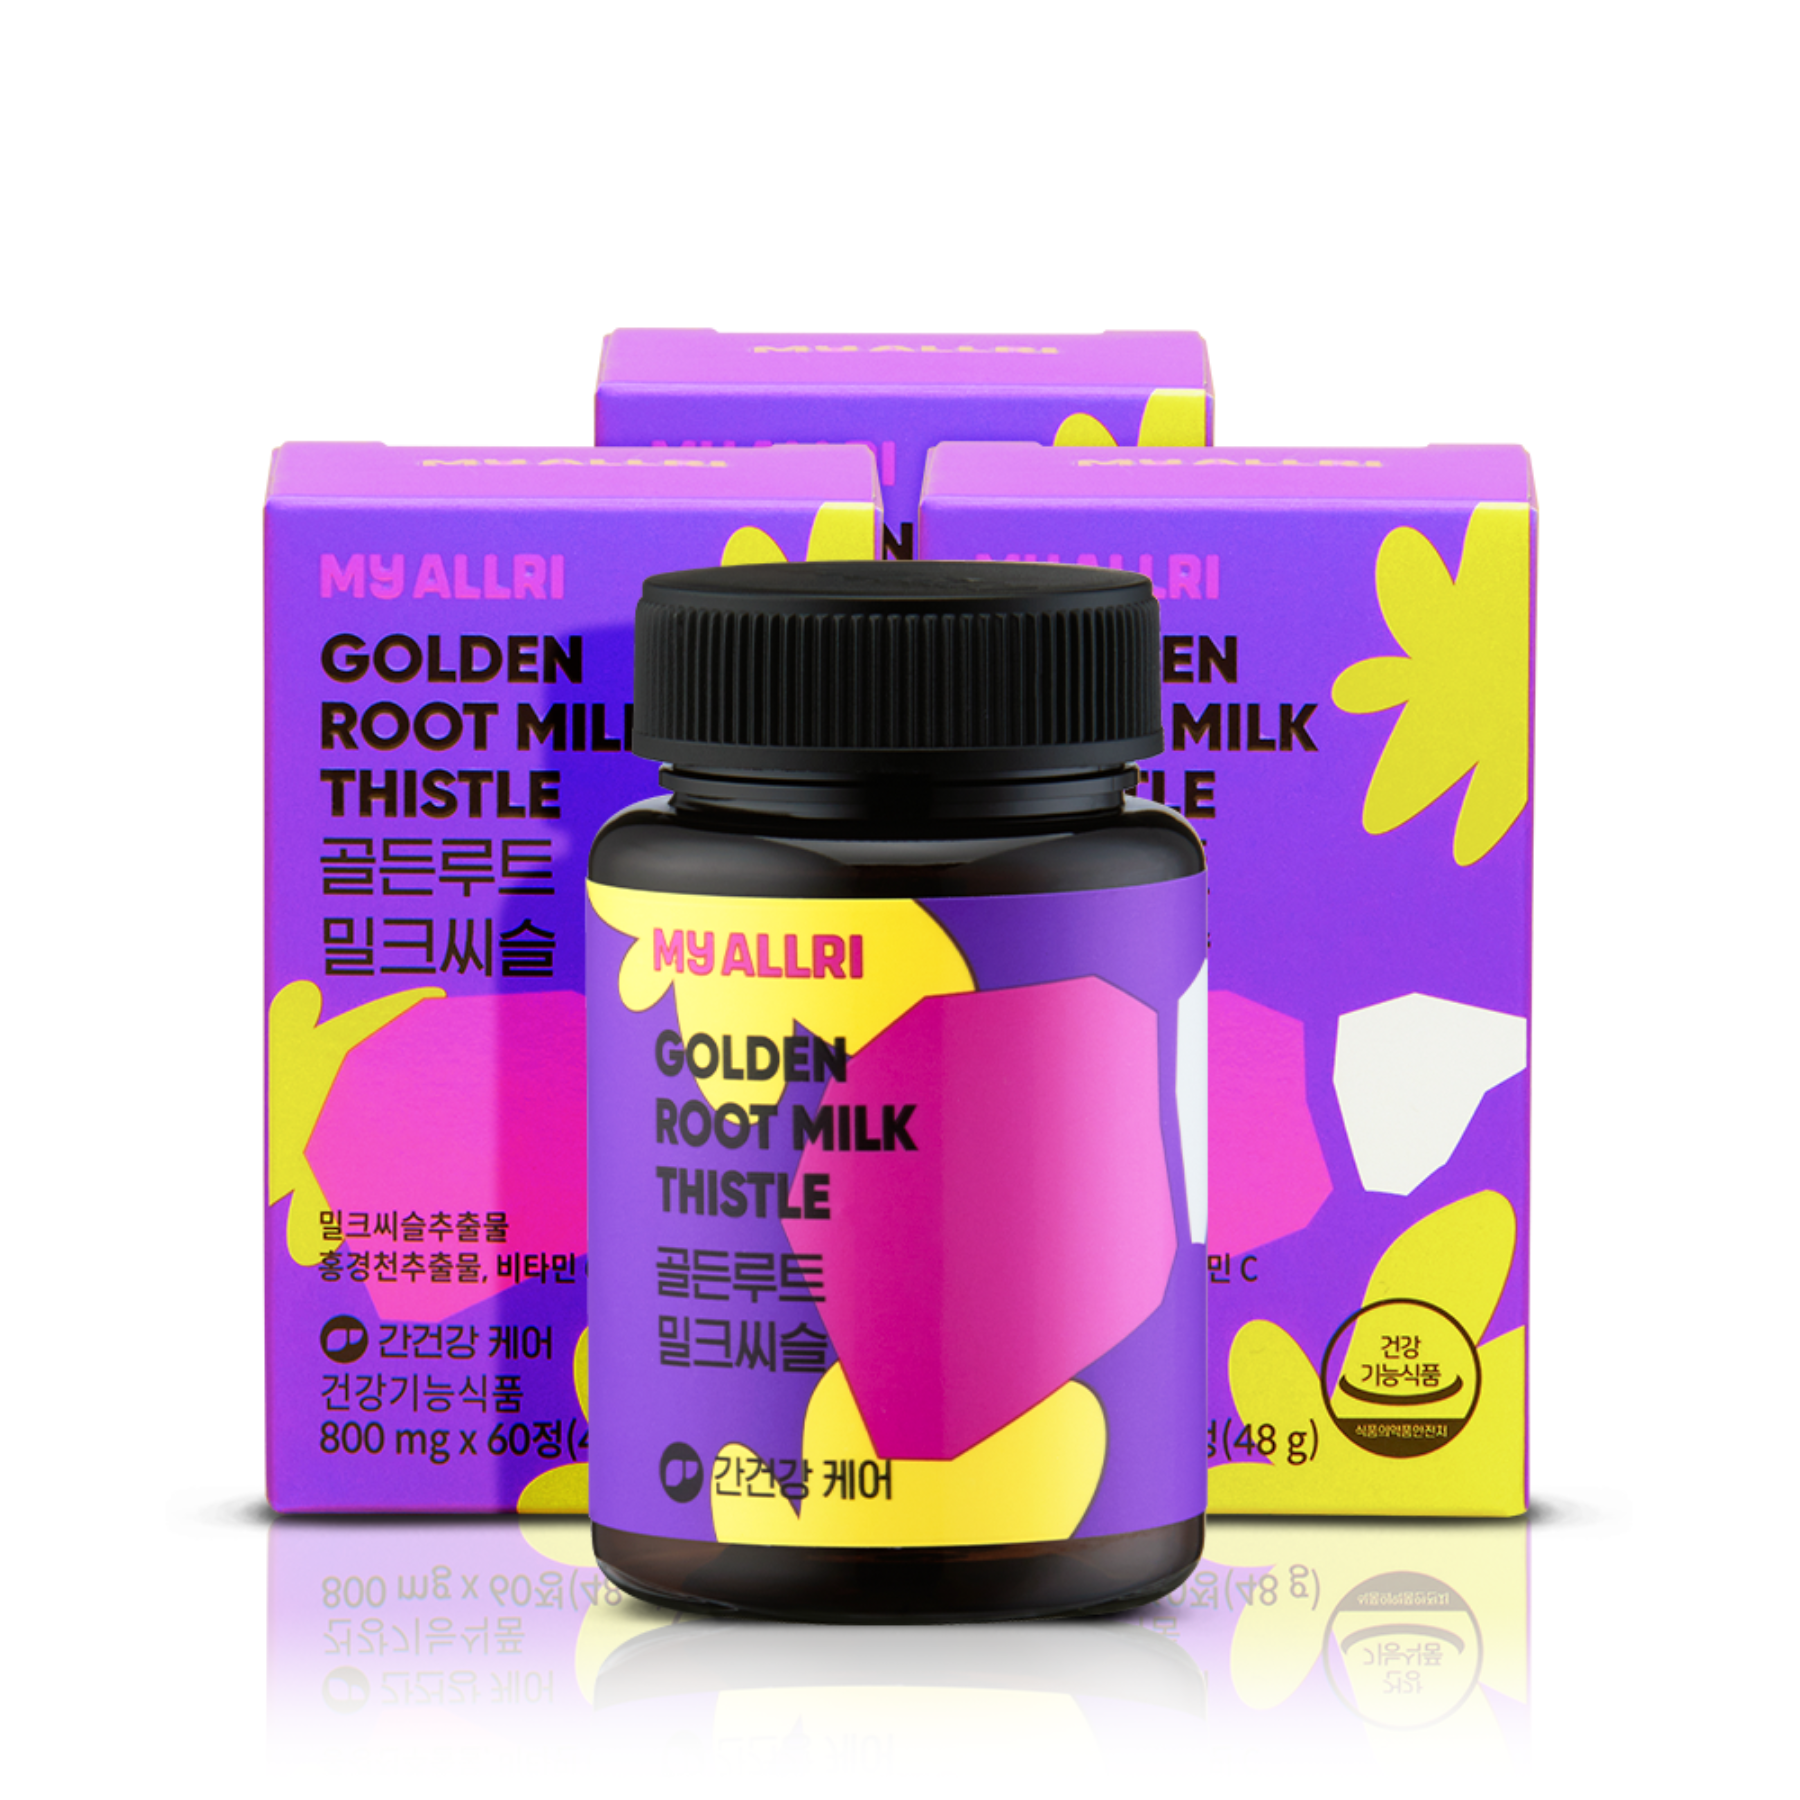 ★33%★ Golden Root Milk Thistle 3ea, 6 months&#039; supply